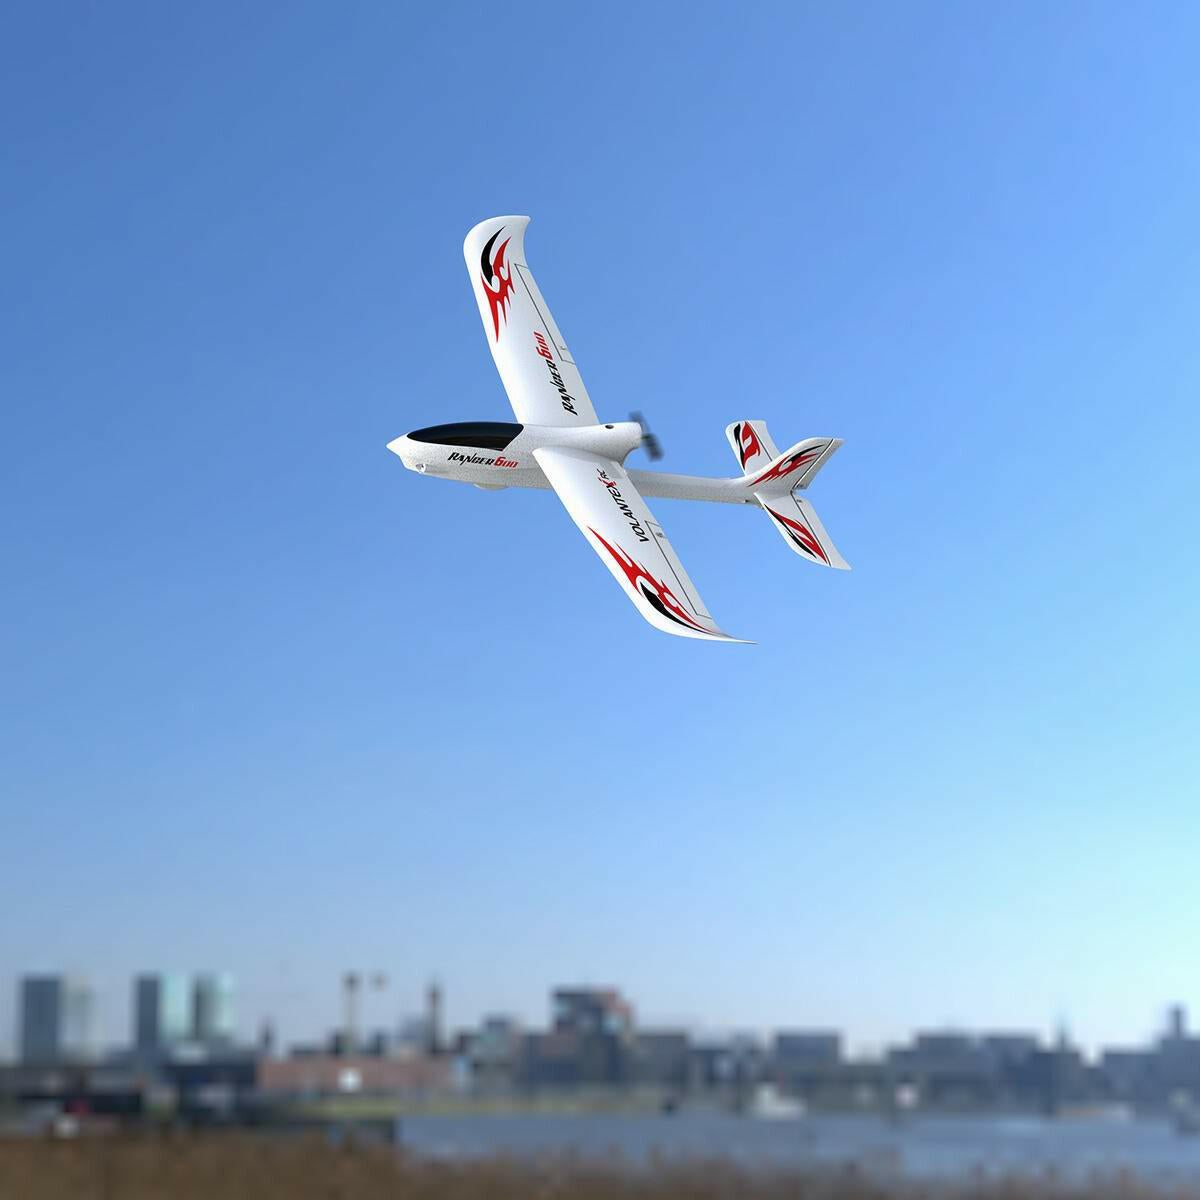 Ranger600 RC Glider Xpilot Stabilizer Plane